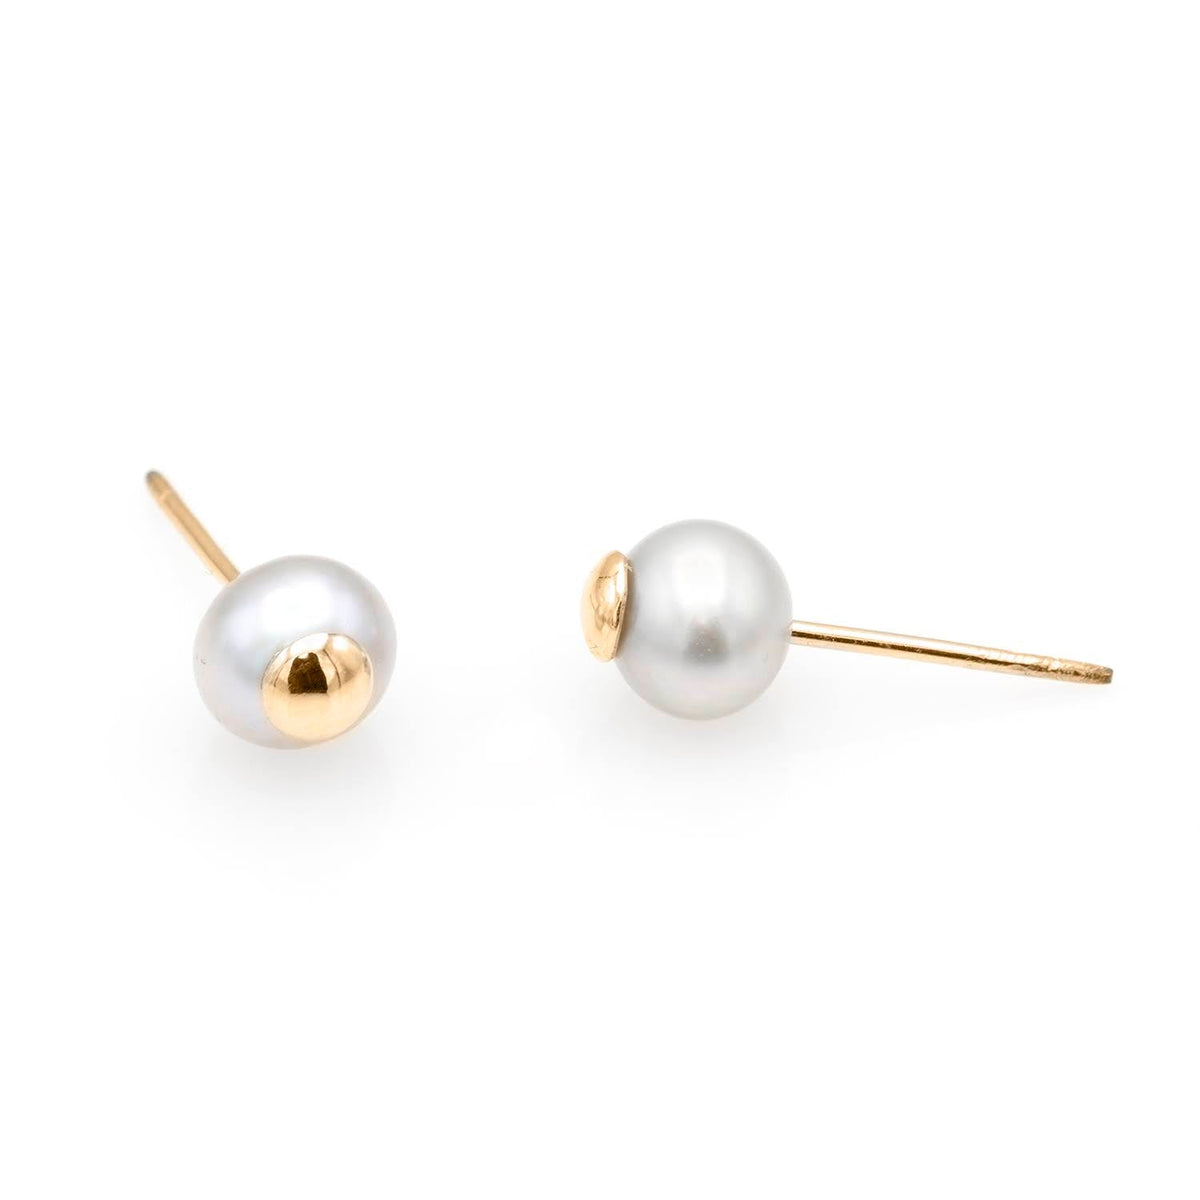 Pearl gray 14K rose gold earrings